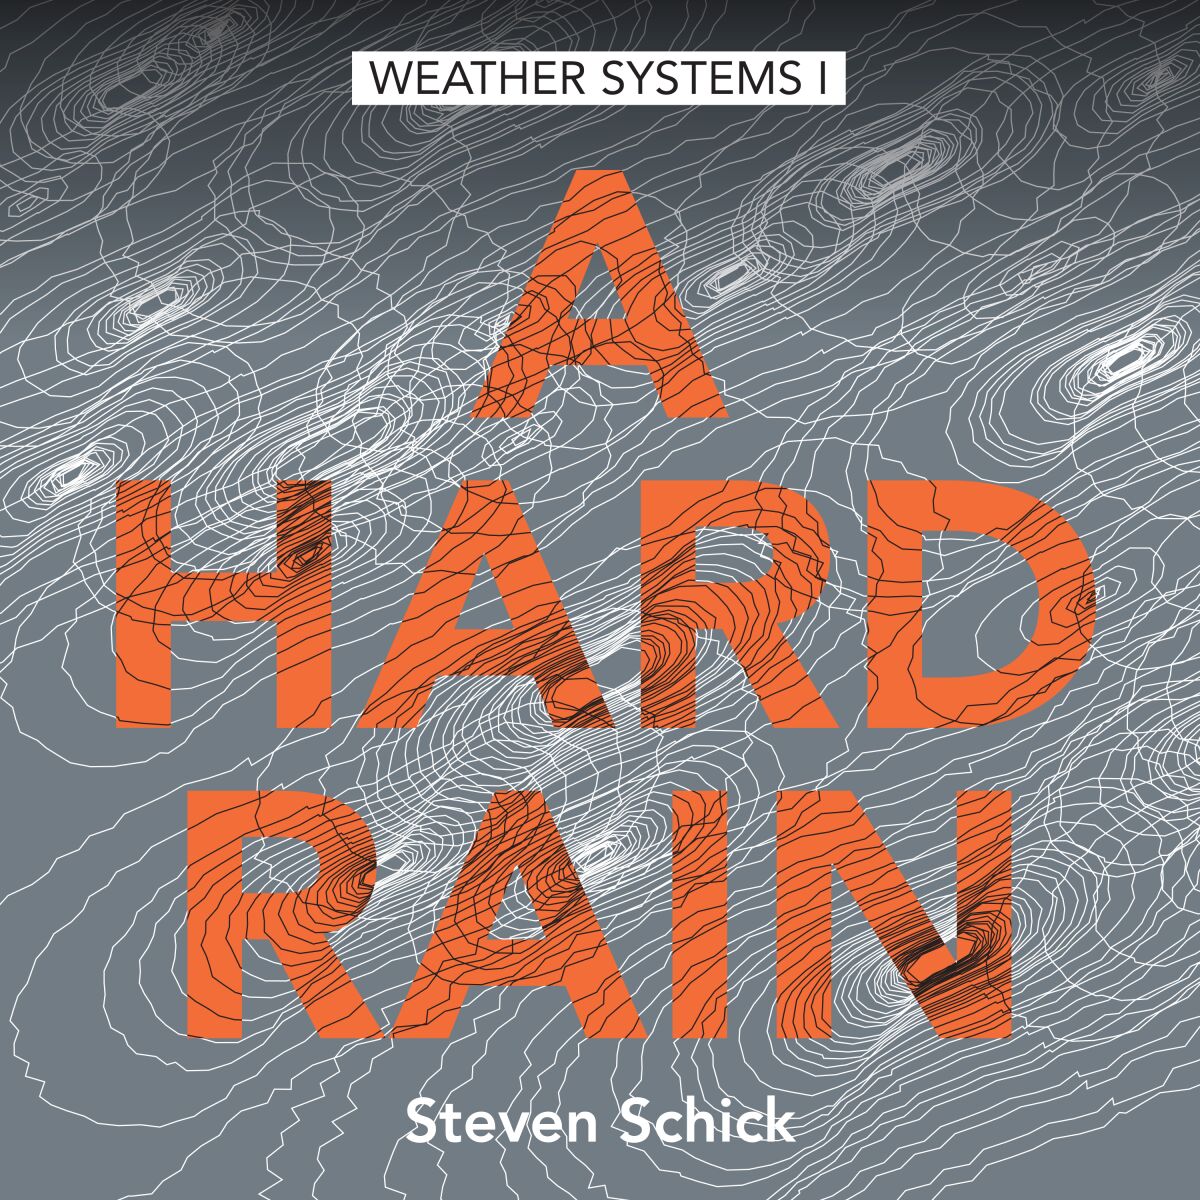 Steven Schick, "Weather Systems I: A Hard Rain"